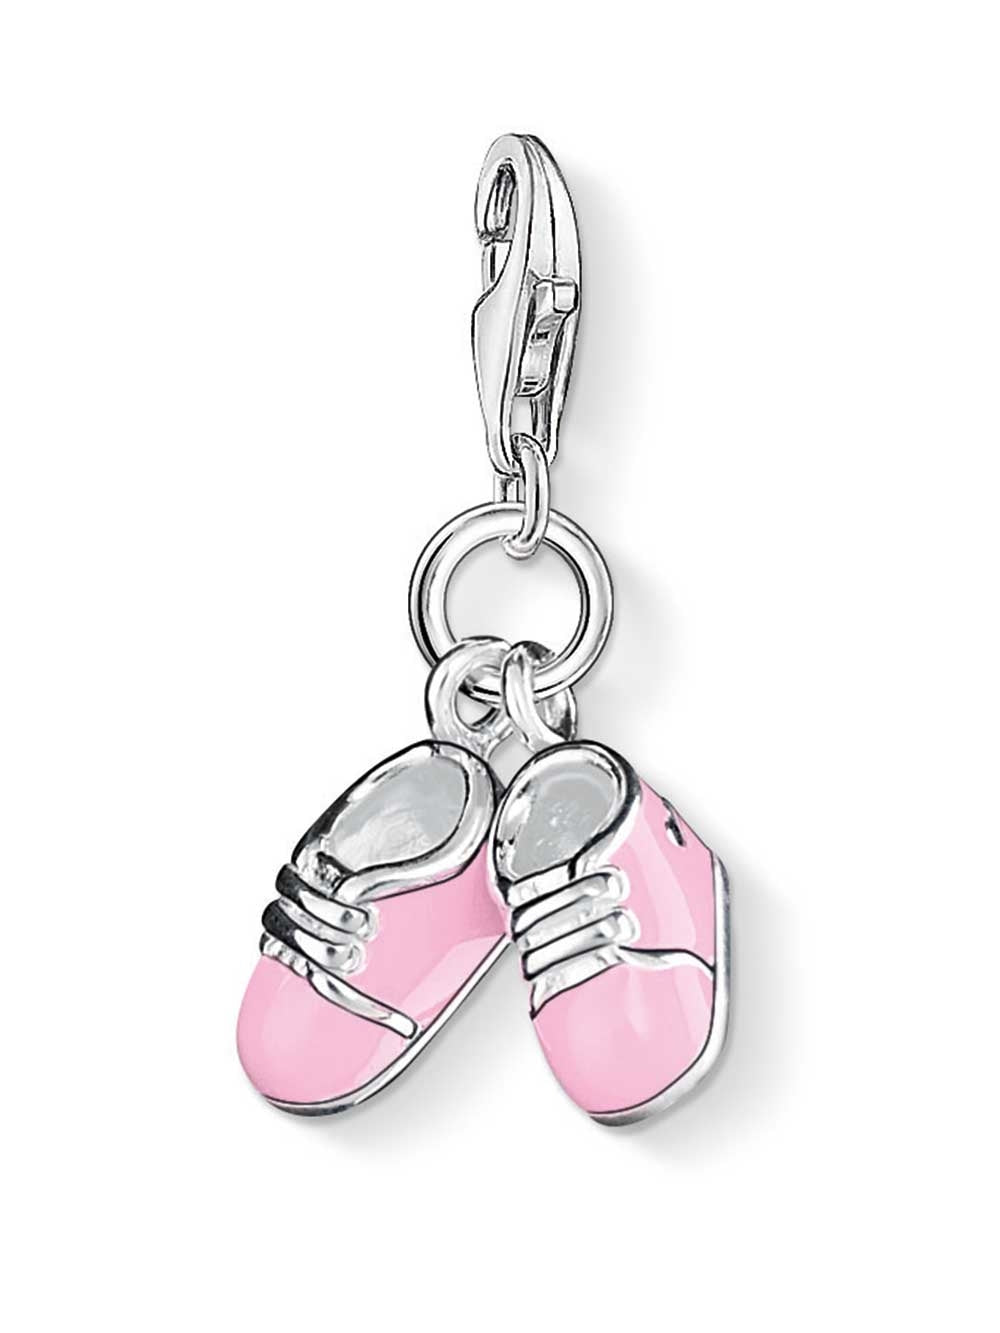 Thomas Sabo Charm 0820-007-9 Pink baby shoes